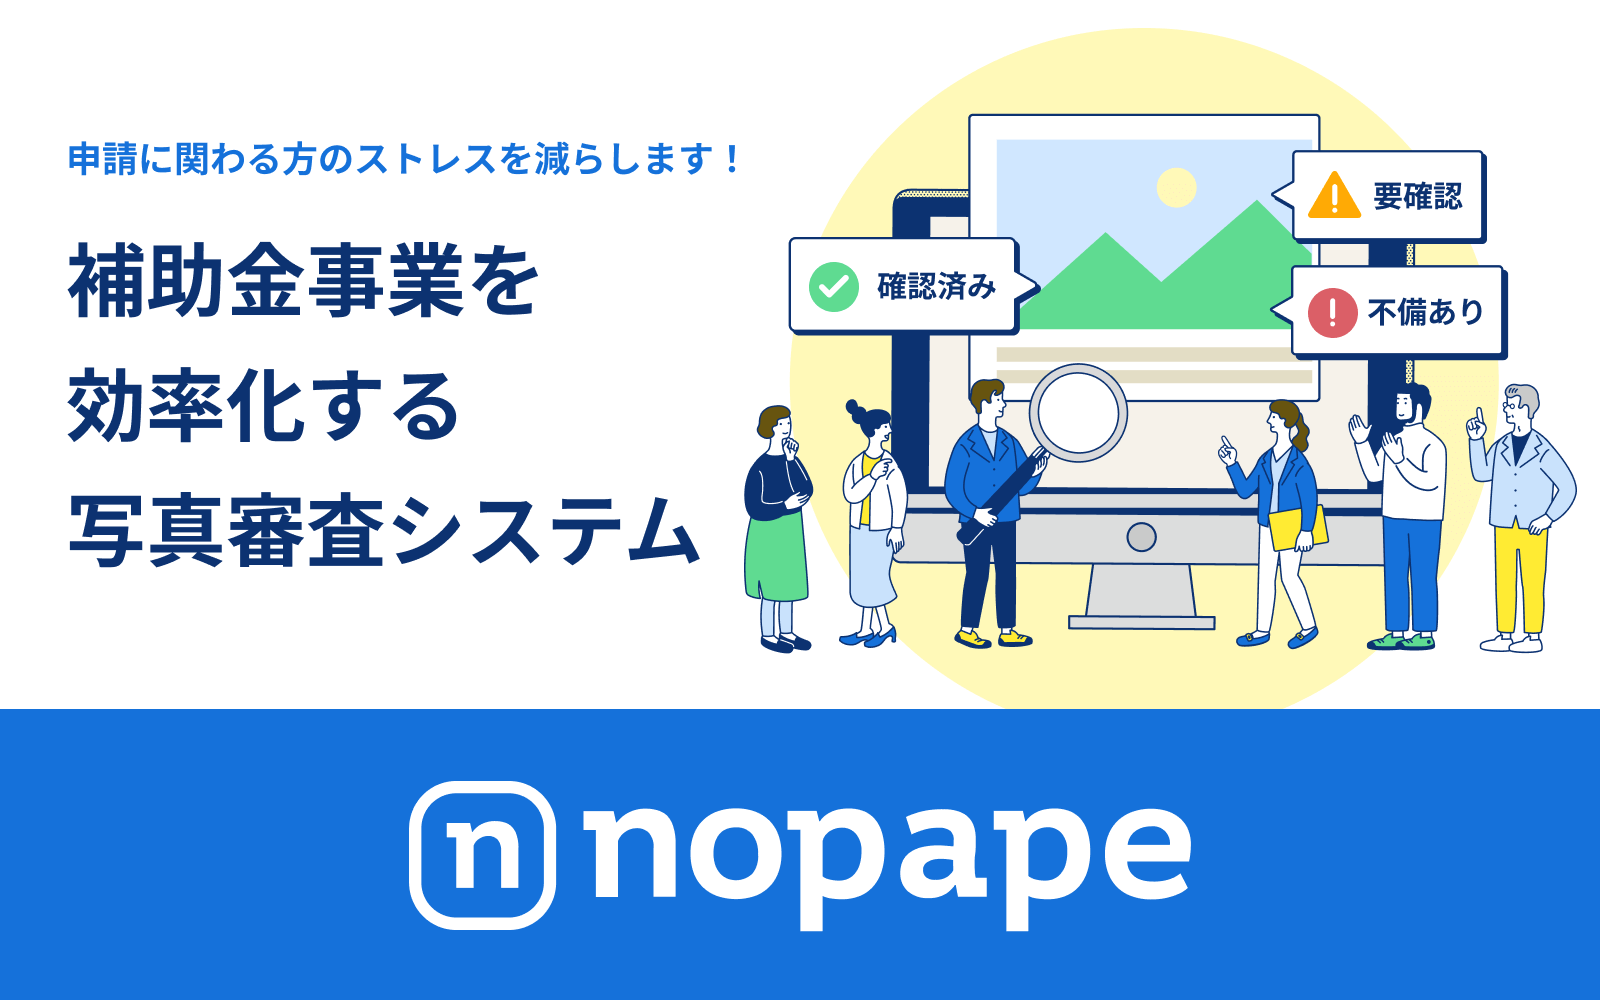 nopape